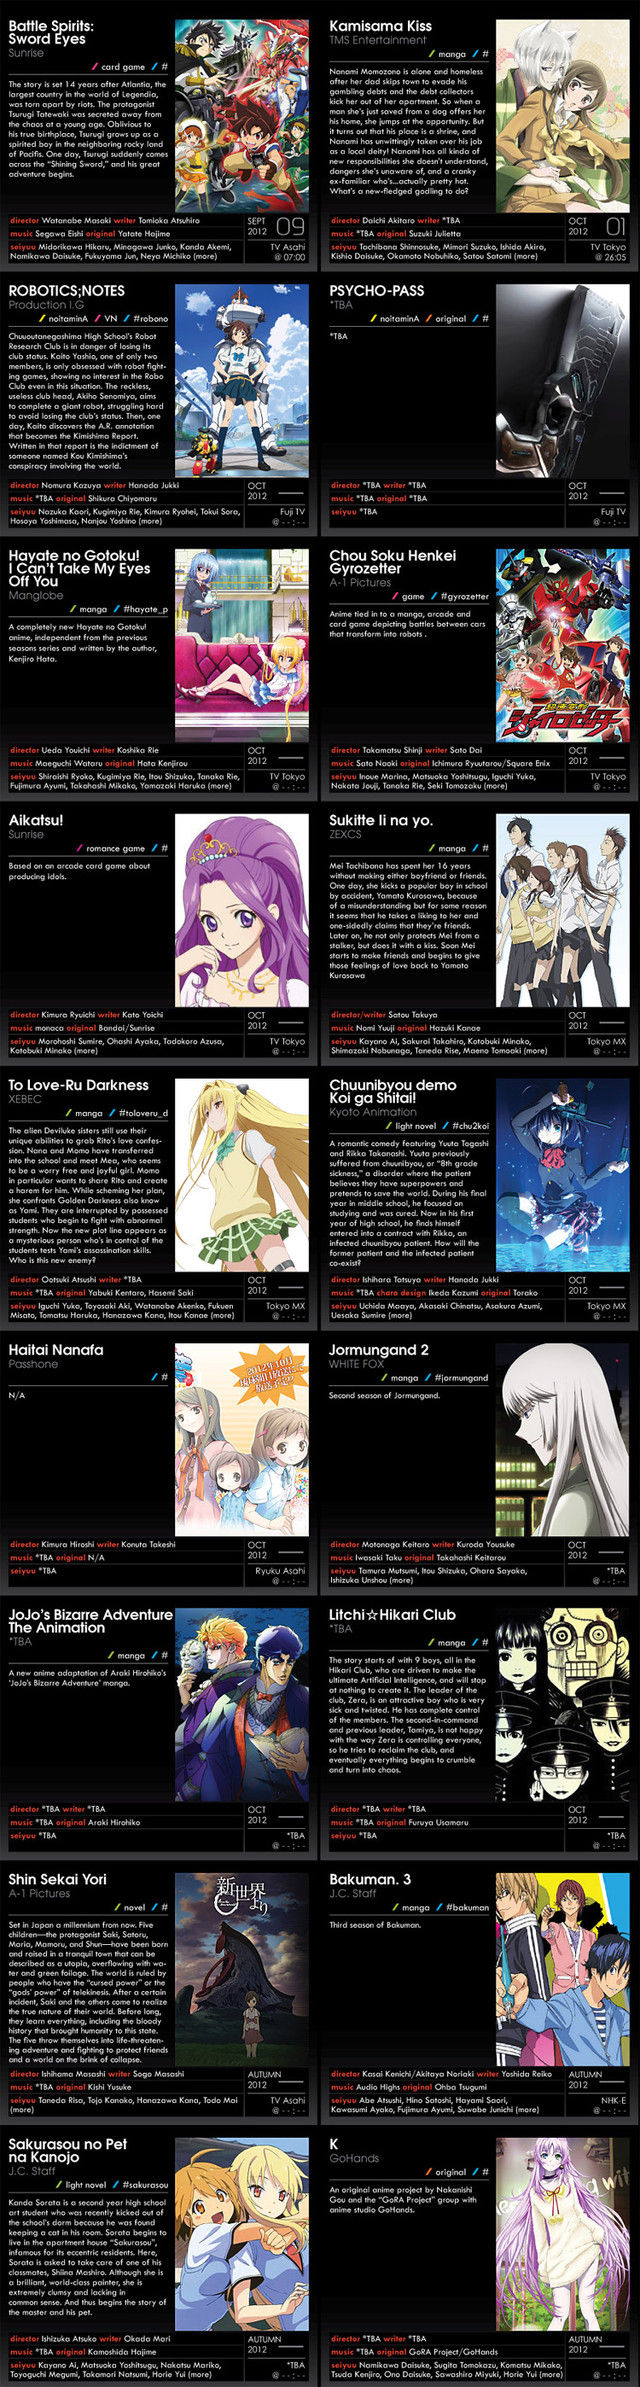 Crunchyroll - Preliminary Fall 2012 Anime Chart